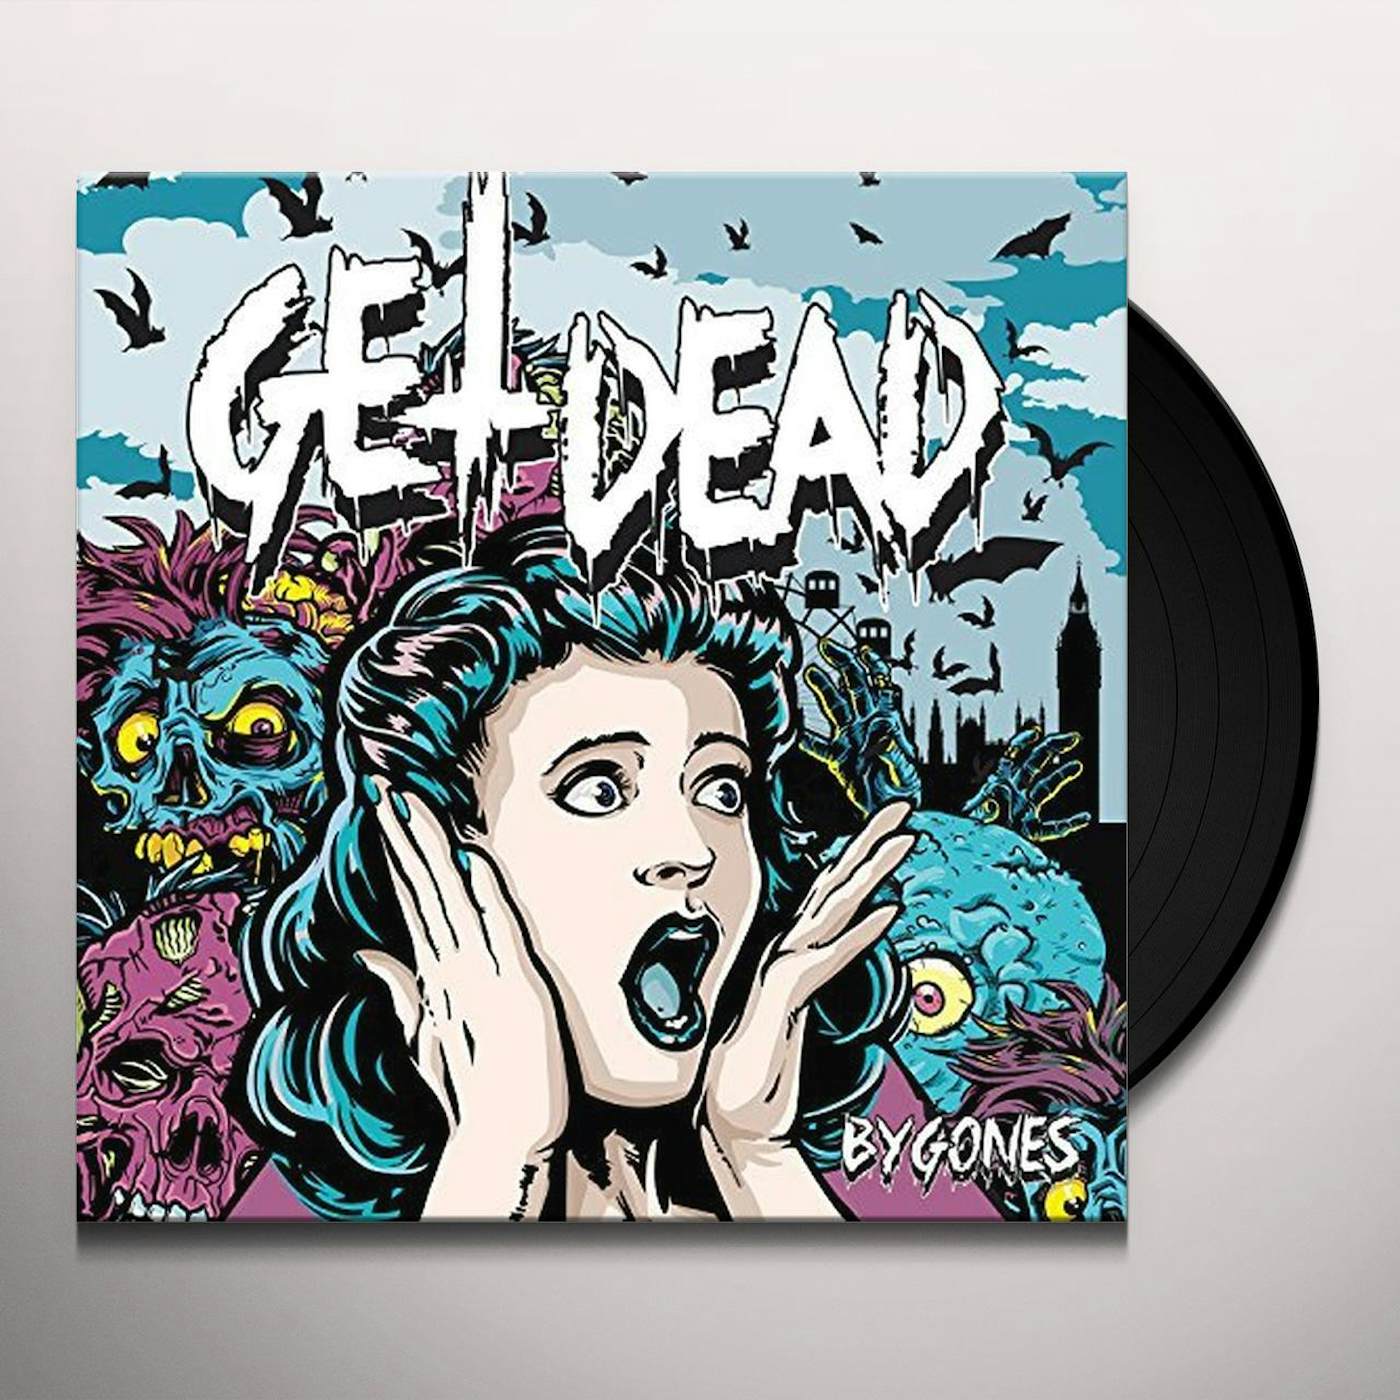 Get Dead Bygones Vinyl Record